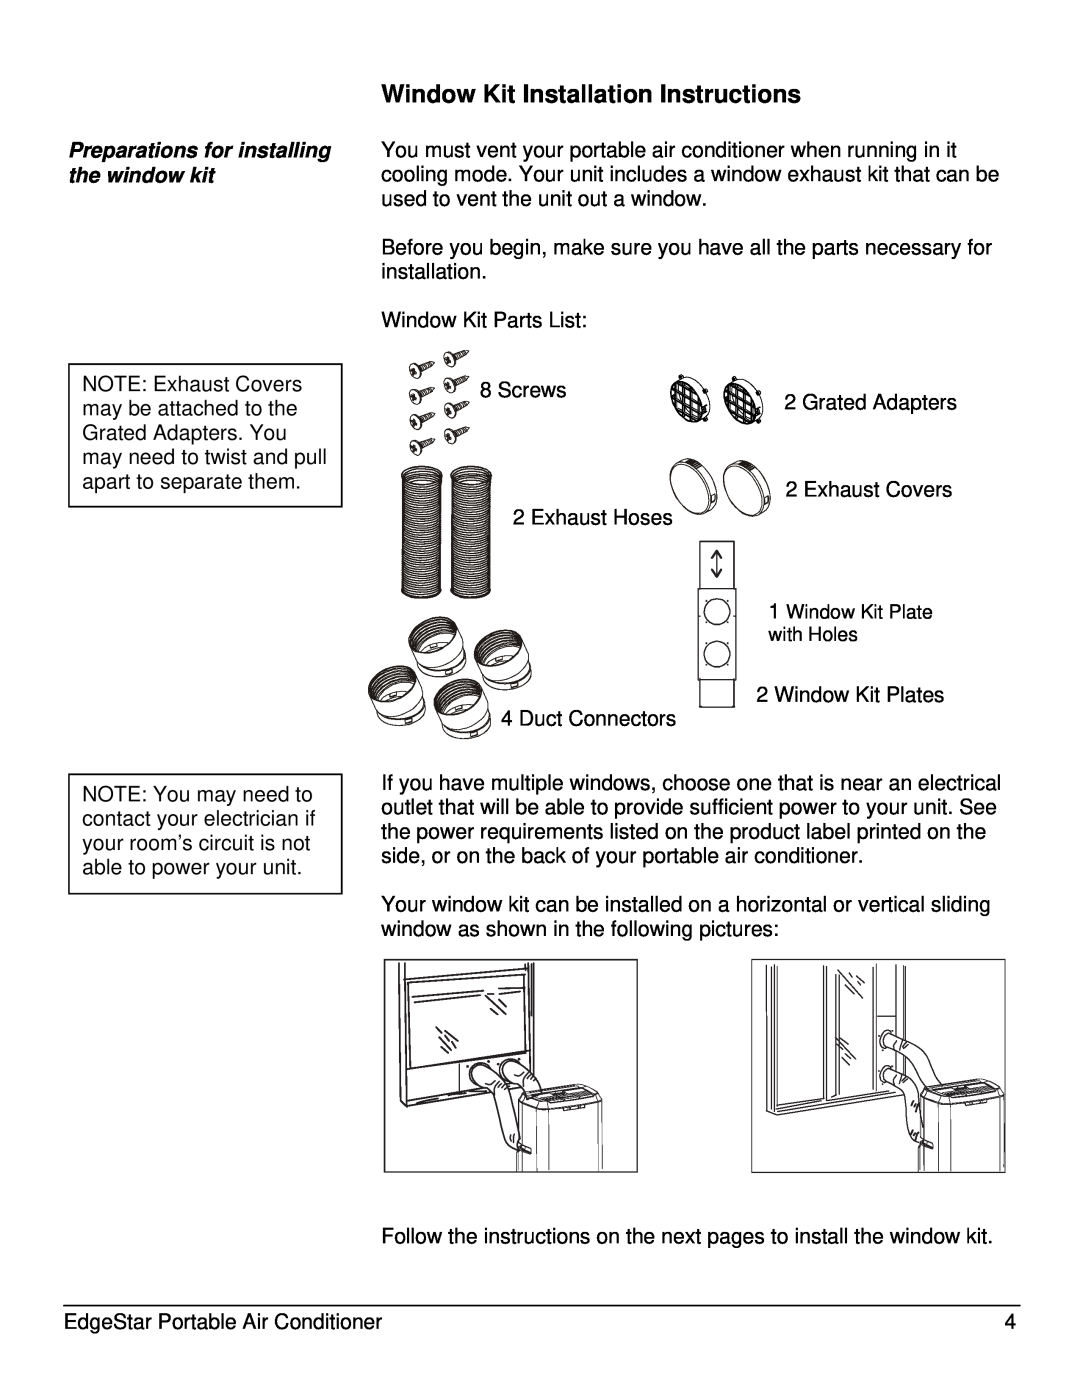 EdgeStar AP14009COM owner manual Window Kit Installation Instructions, Preparations for installing the window kit 